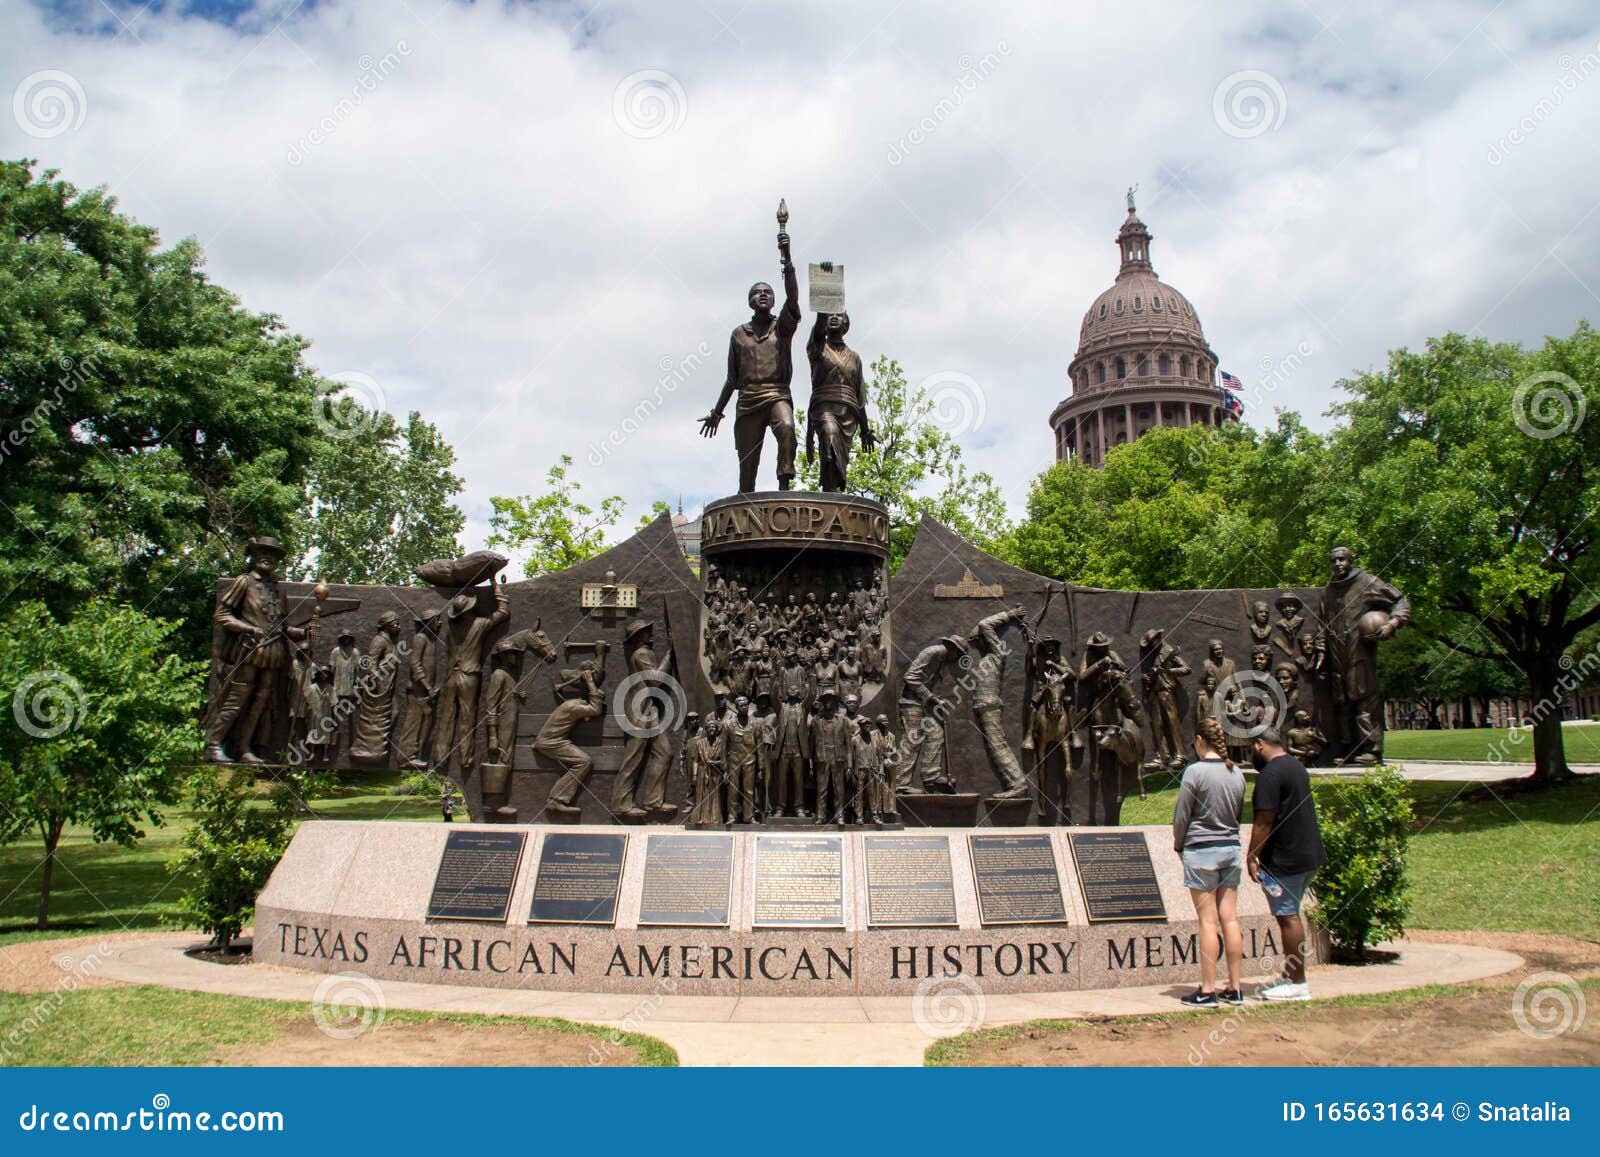 Texas African American History Memorial, Austin Editorial Stock Image